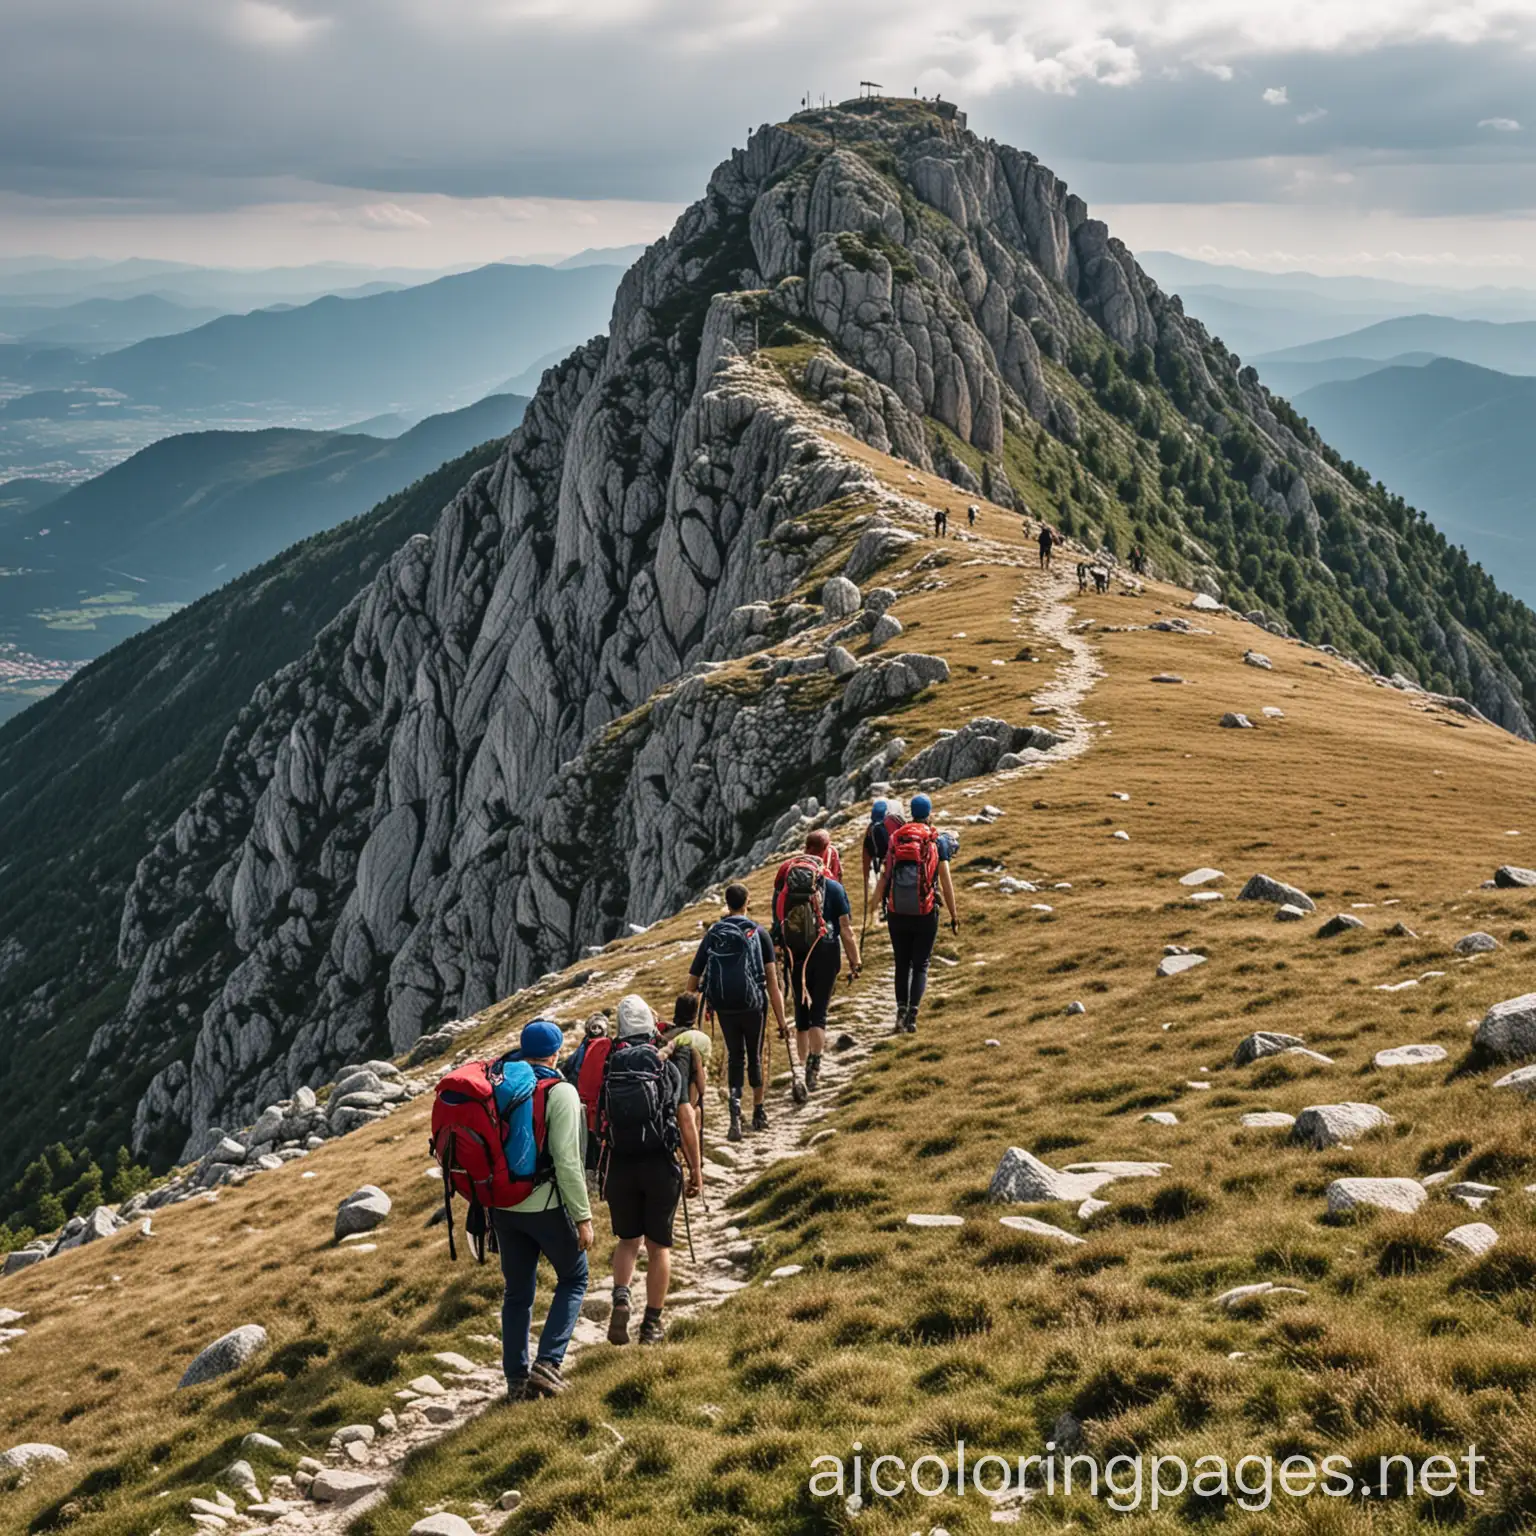 Hikers-Ascending-Mount-Karadzica-Adventure-Trekking-in-North-Macedonia